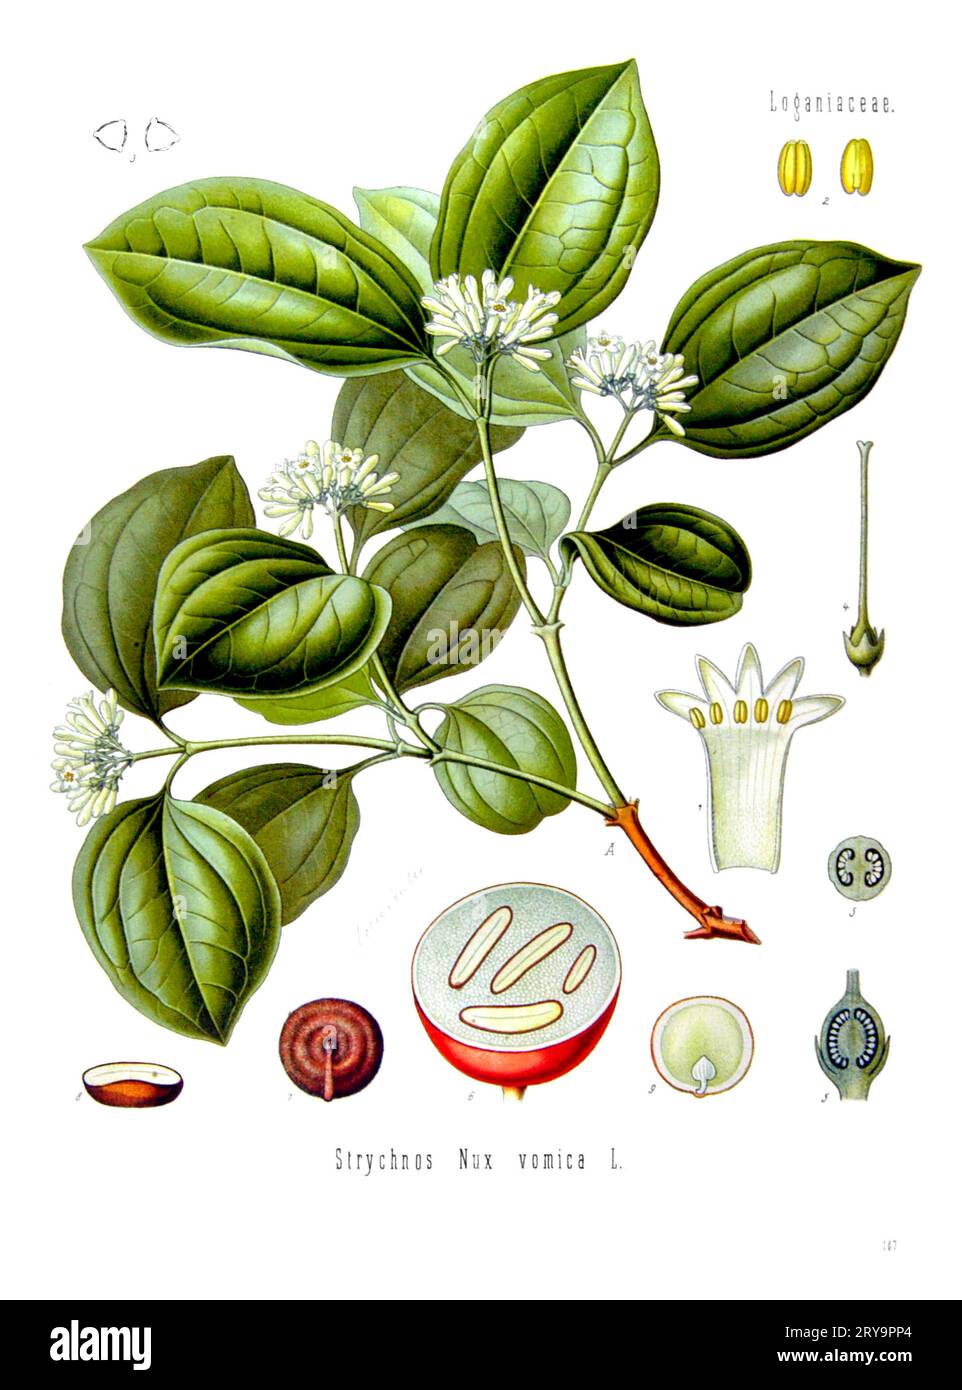 Strychnine tree (Nux vomica), illustration Stock Photo